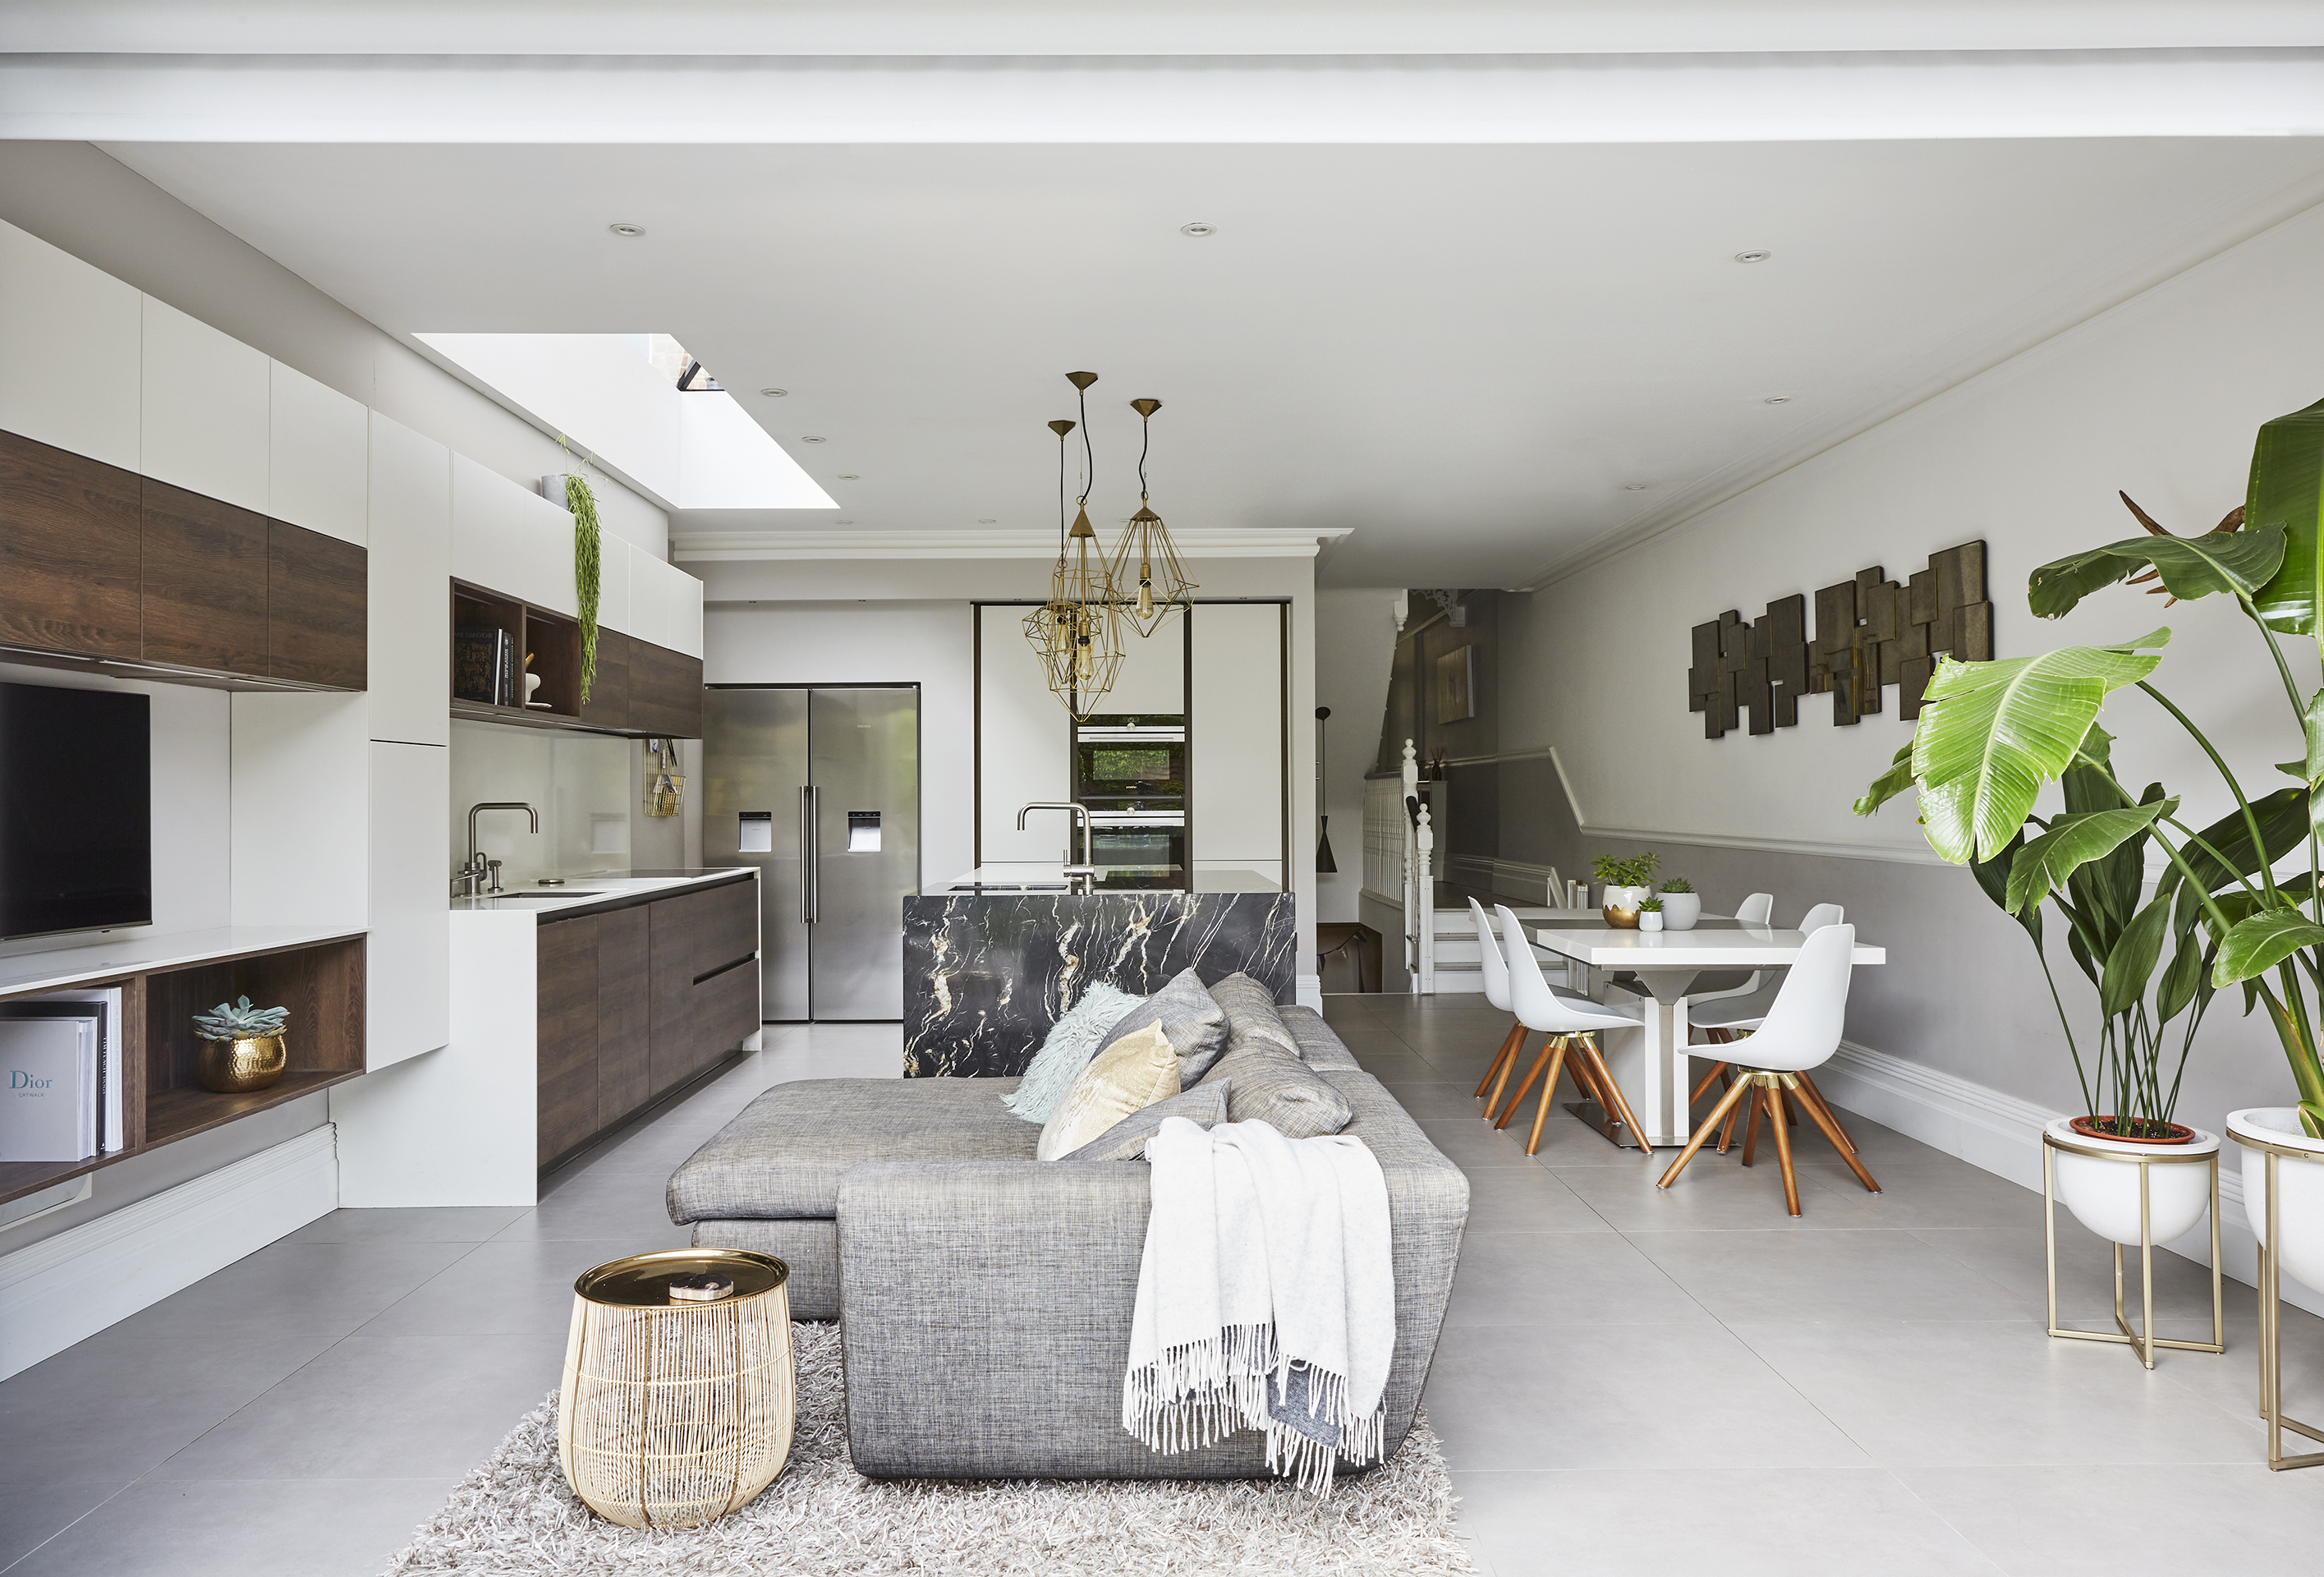 Family Luxury Interior Designed North London home